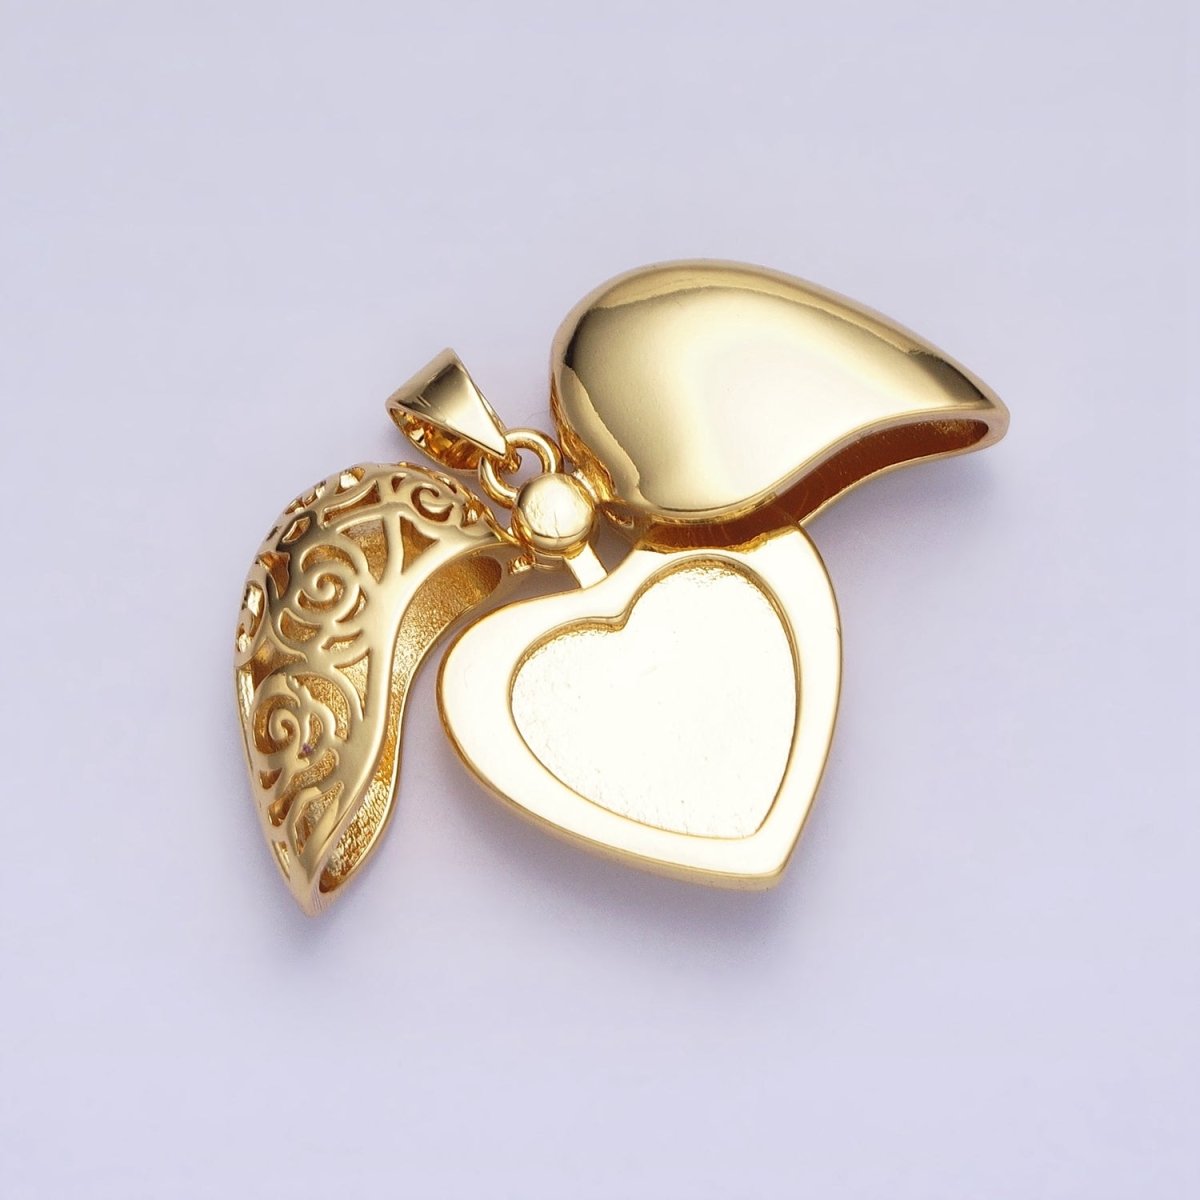 Dainty Gold Heart Pendant Cosmic Open Heart Charm Locket for Valentine Jewelry AA261 - DLUXCA